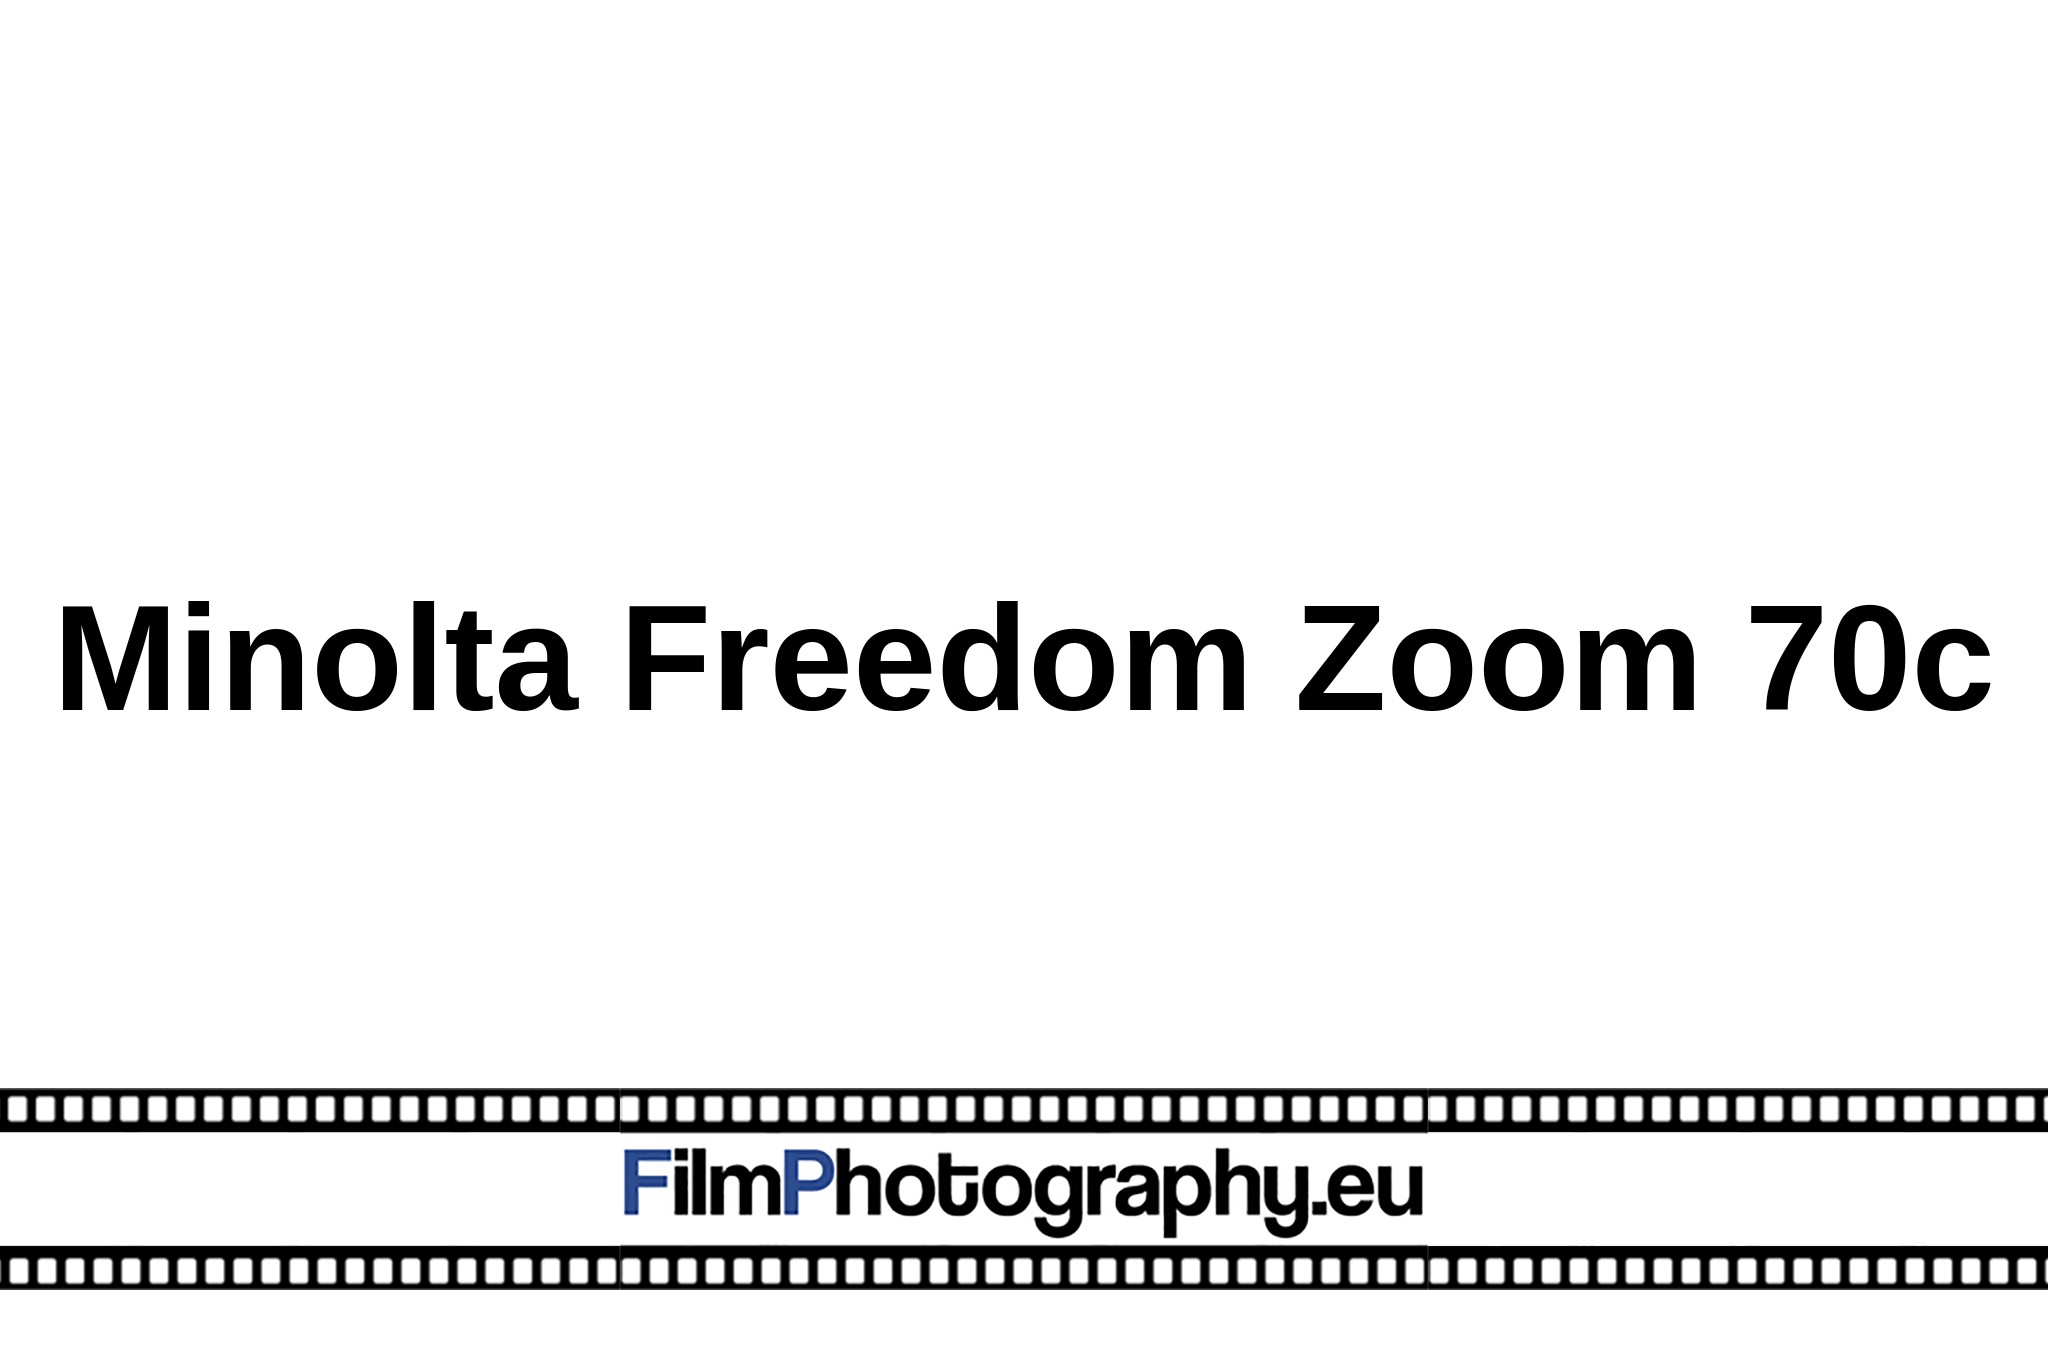 Minolta Freedom Zoom 70c - Functionality, Films & Batteries